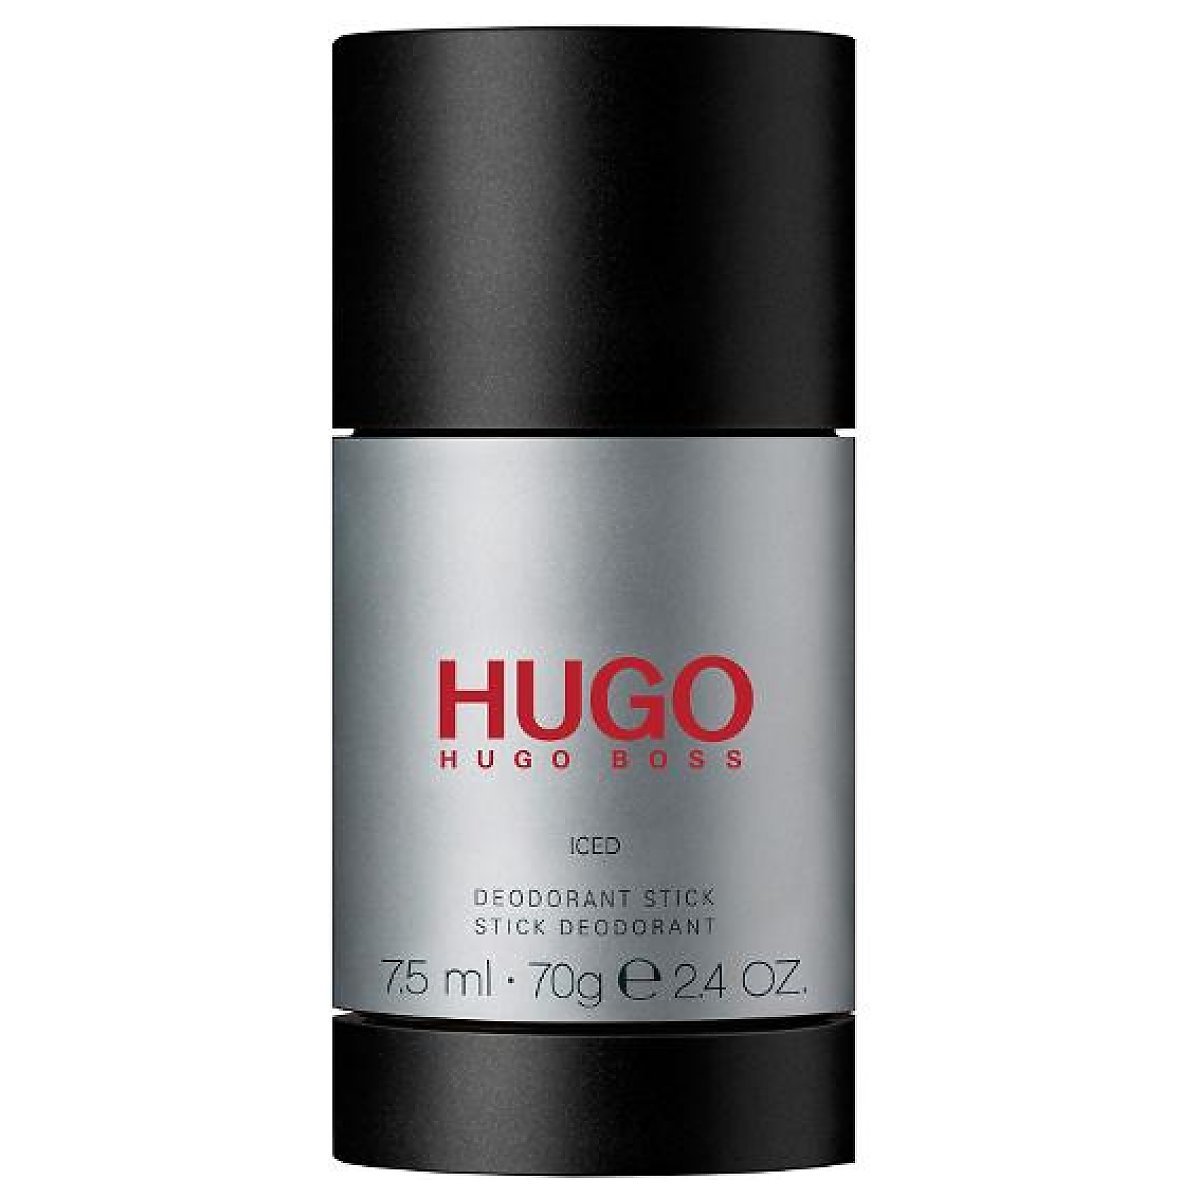 Hugo Boss HUGO Iced Dezodorant sztyft 75ml - Perfumeria Dolce.pl